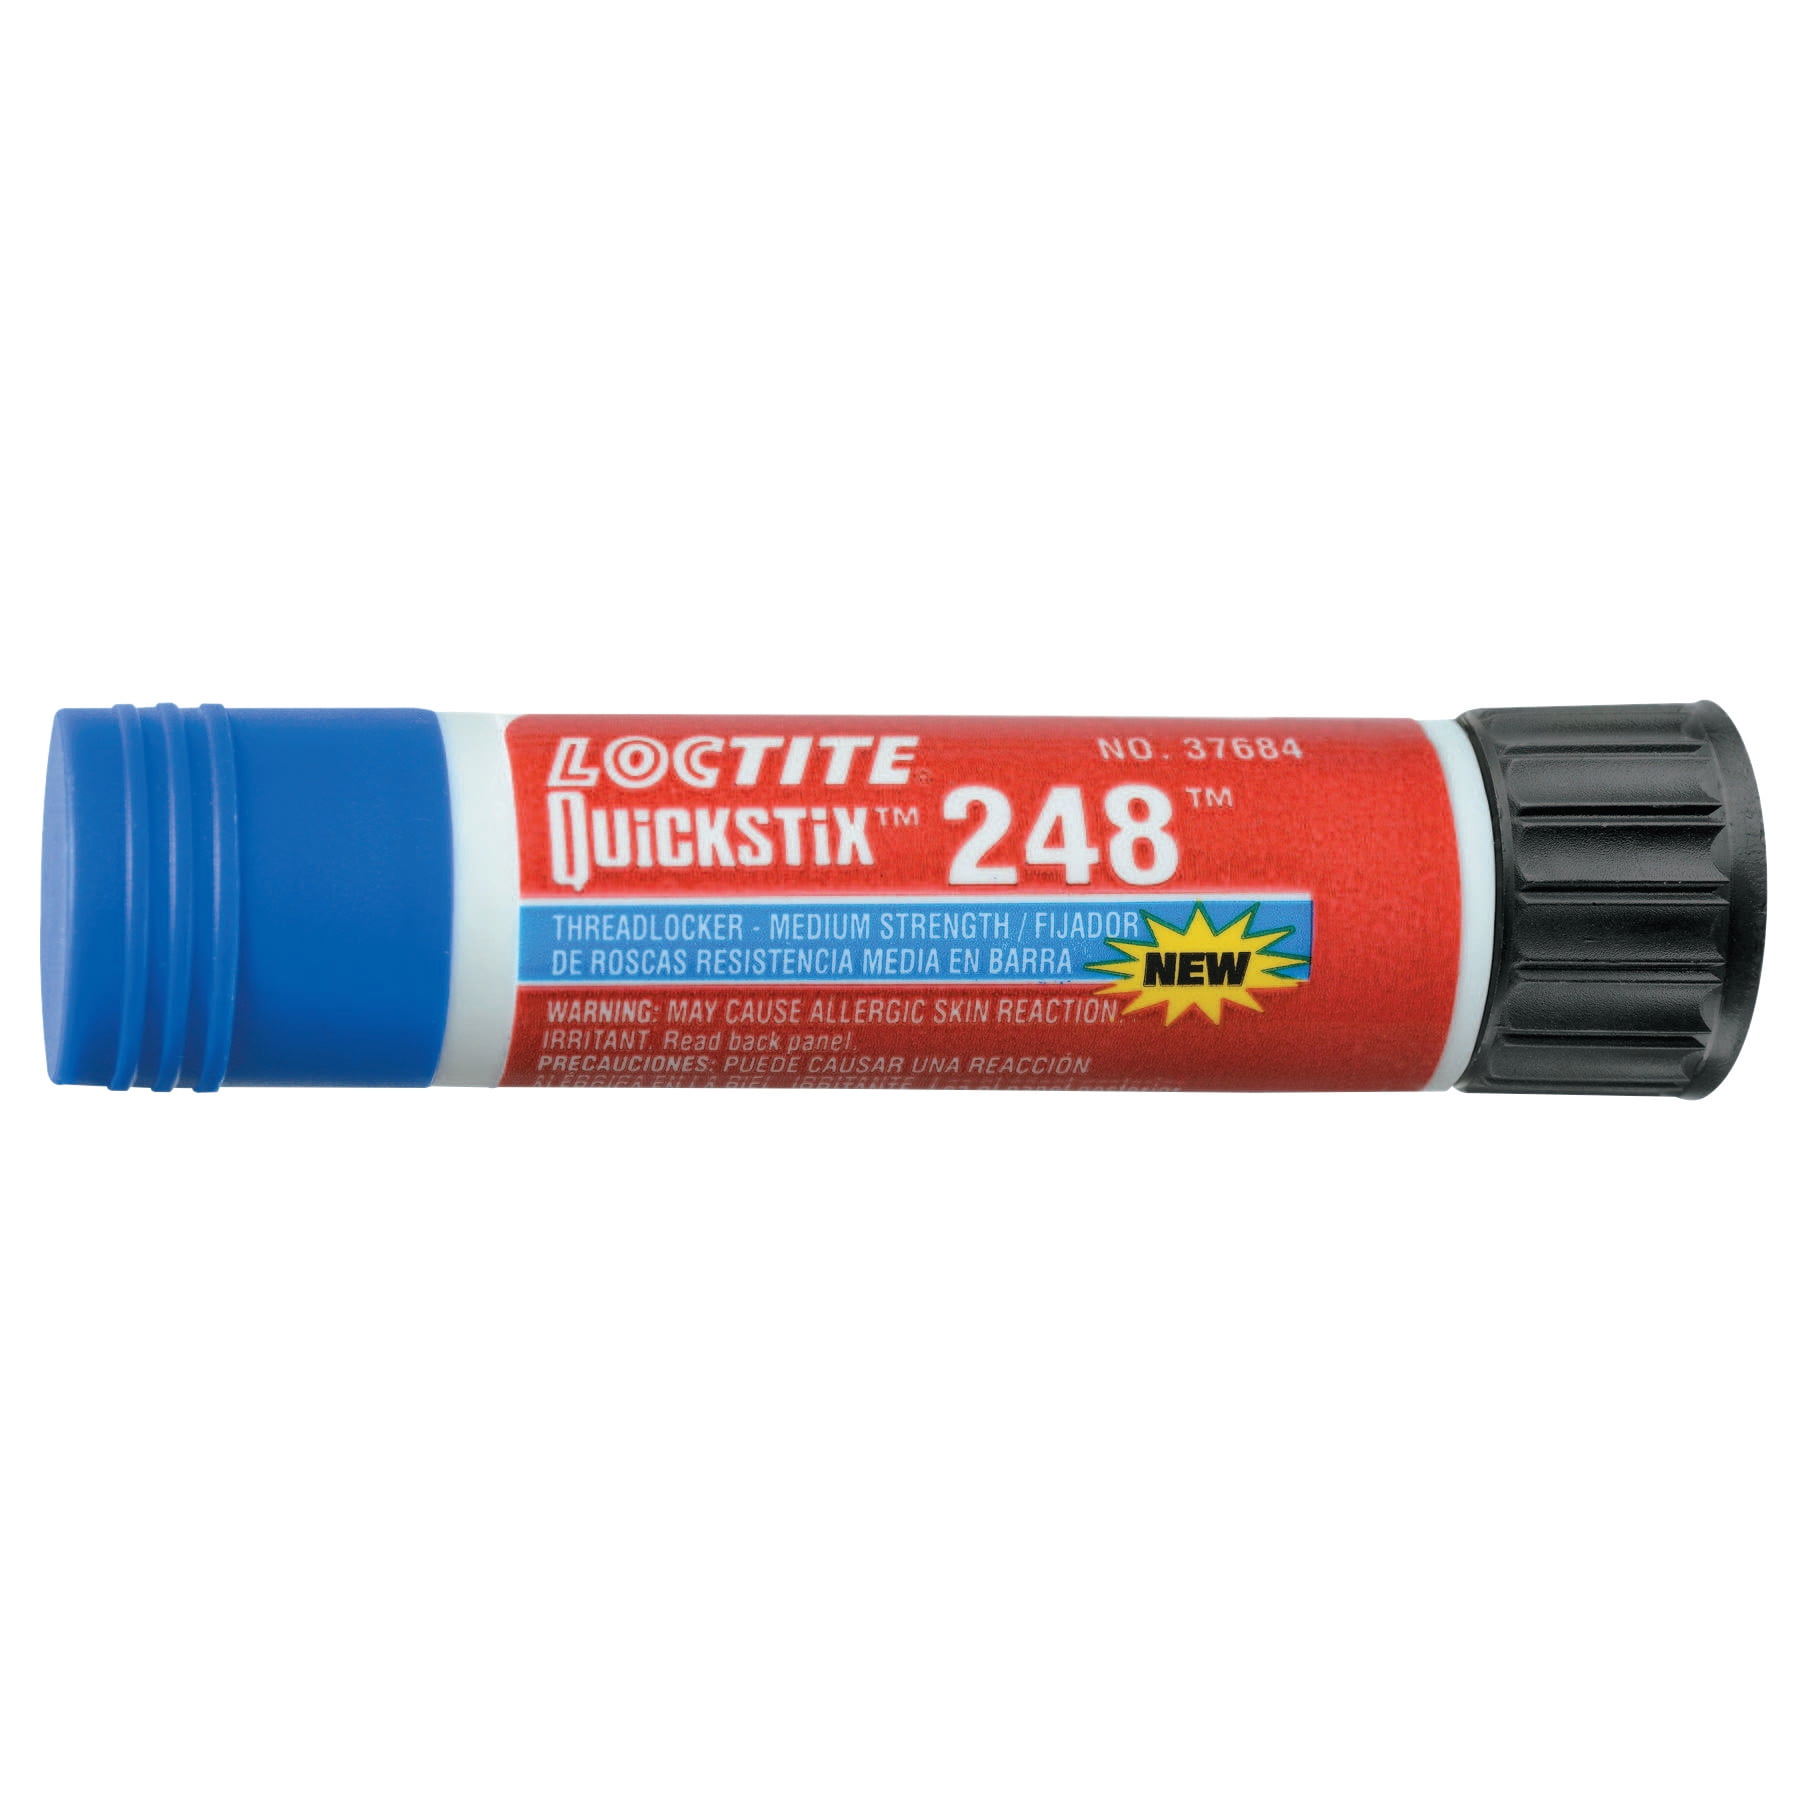 Loctite Pro Lock Tight Threadlocker 51604, IDH:234345, 50 ml Tube, Black